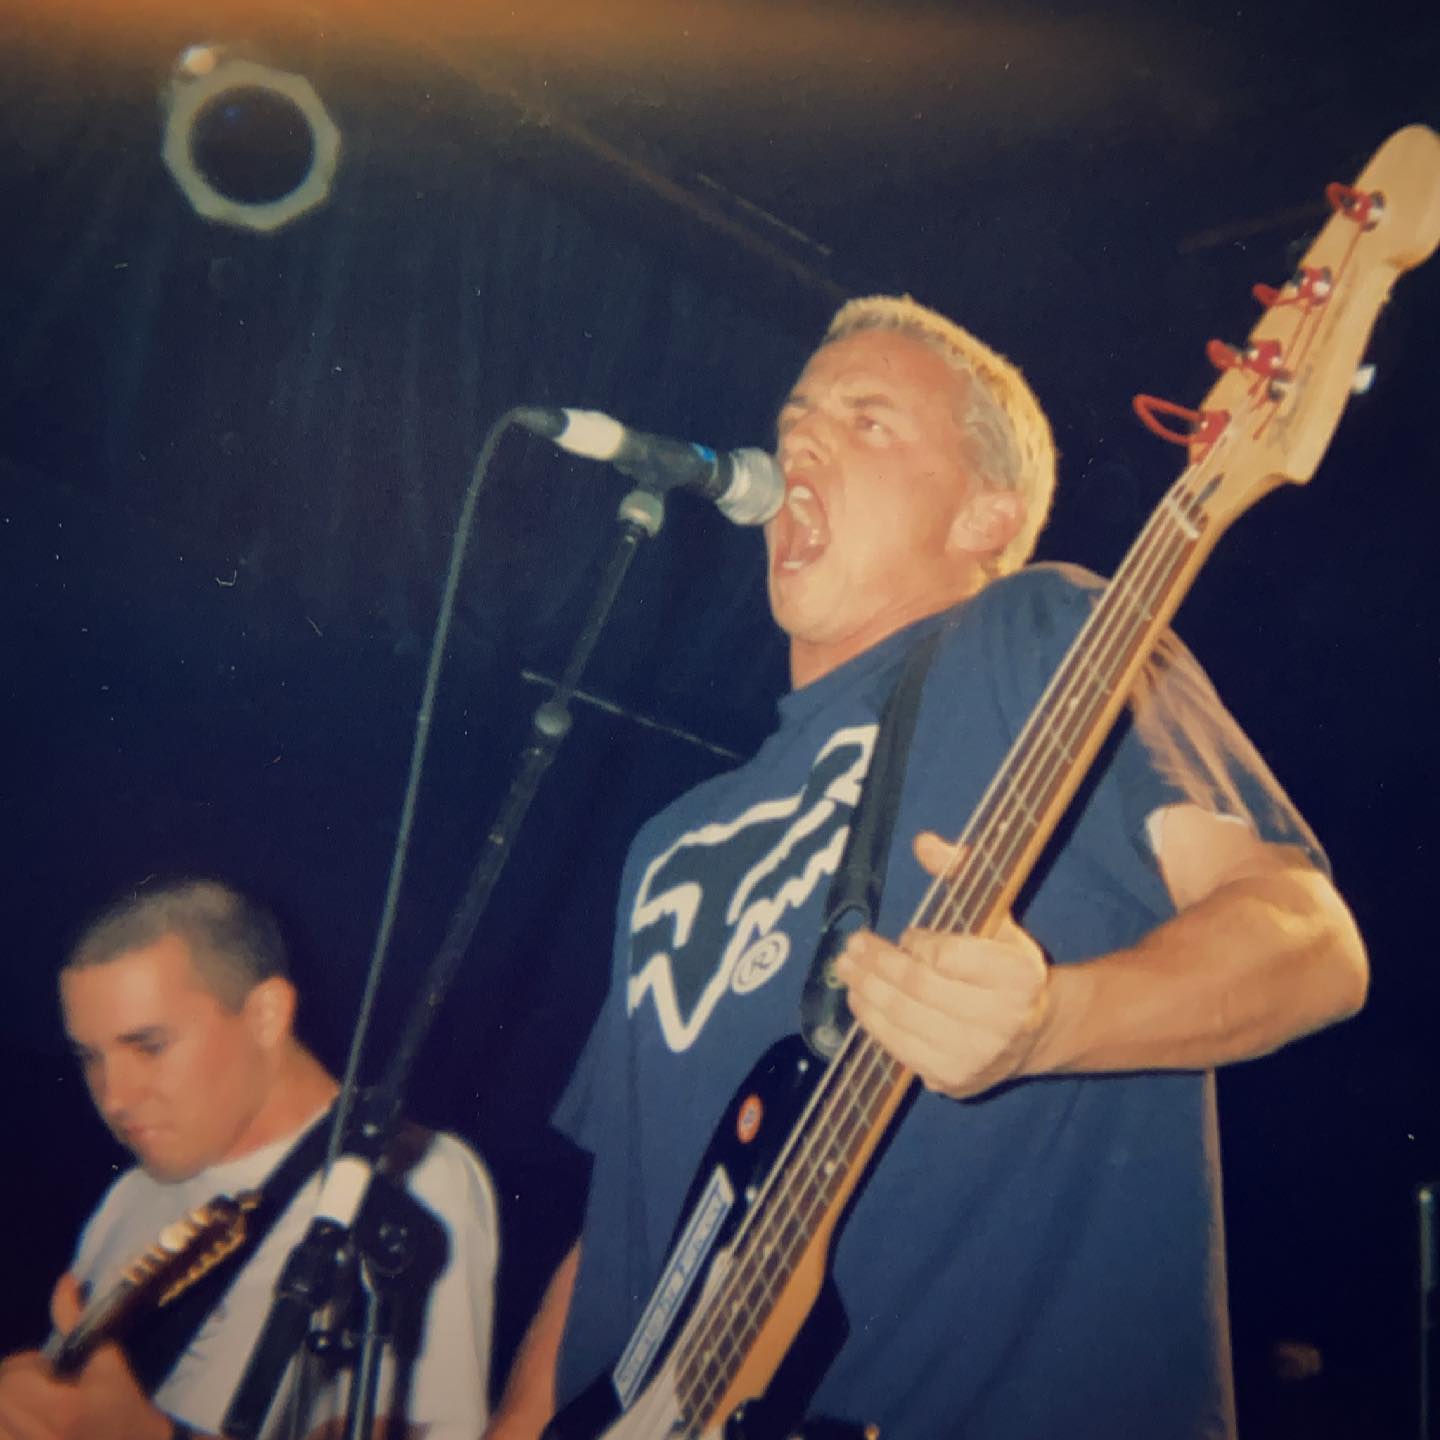 Straight Faced - Bolwerk Sneek NL - 16 November 1996 #hardcore #punkrock @fearlessrecords @epitaphrecords @victoryrecords #gigpic by @twentylandcrew